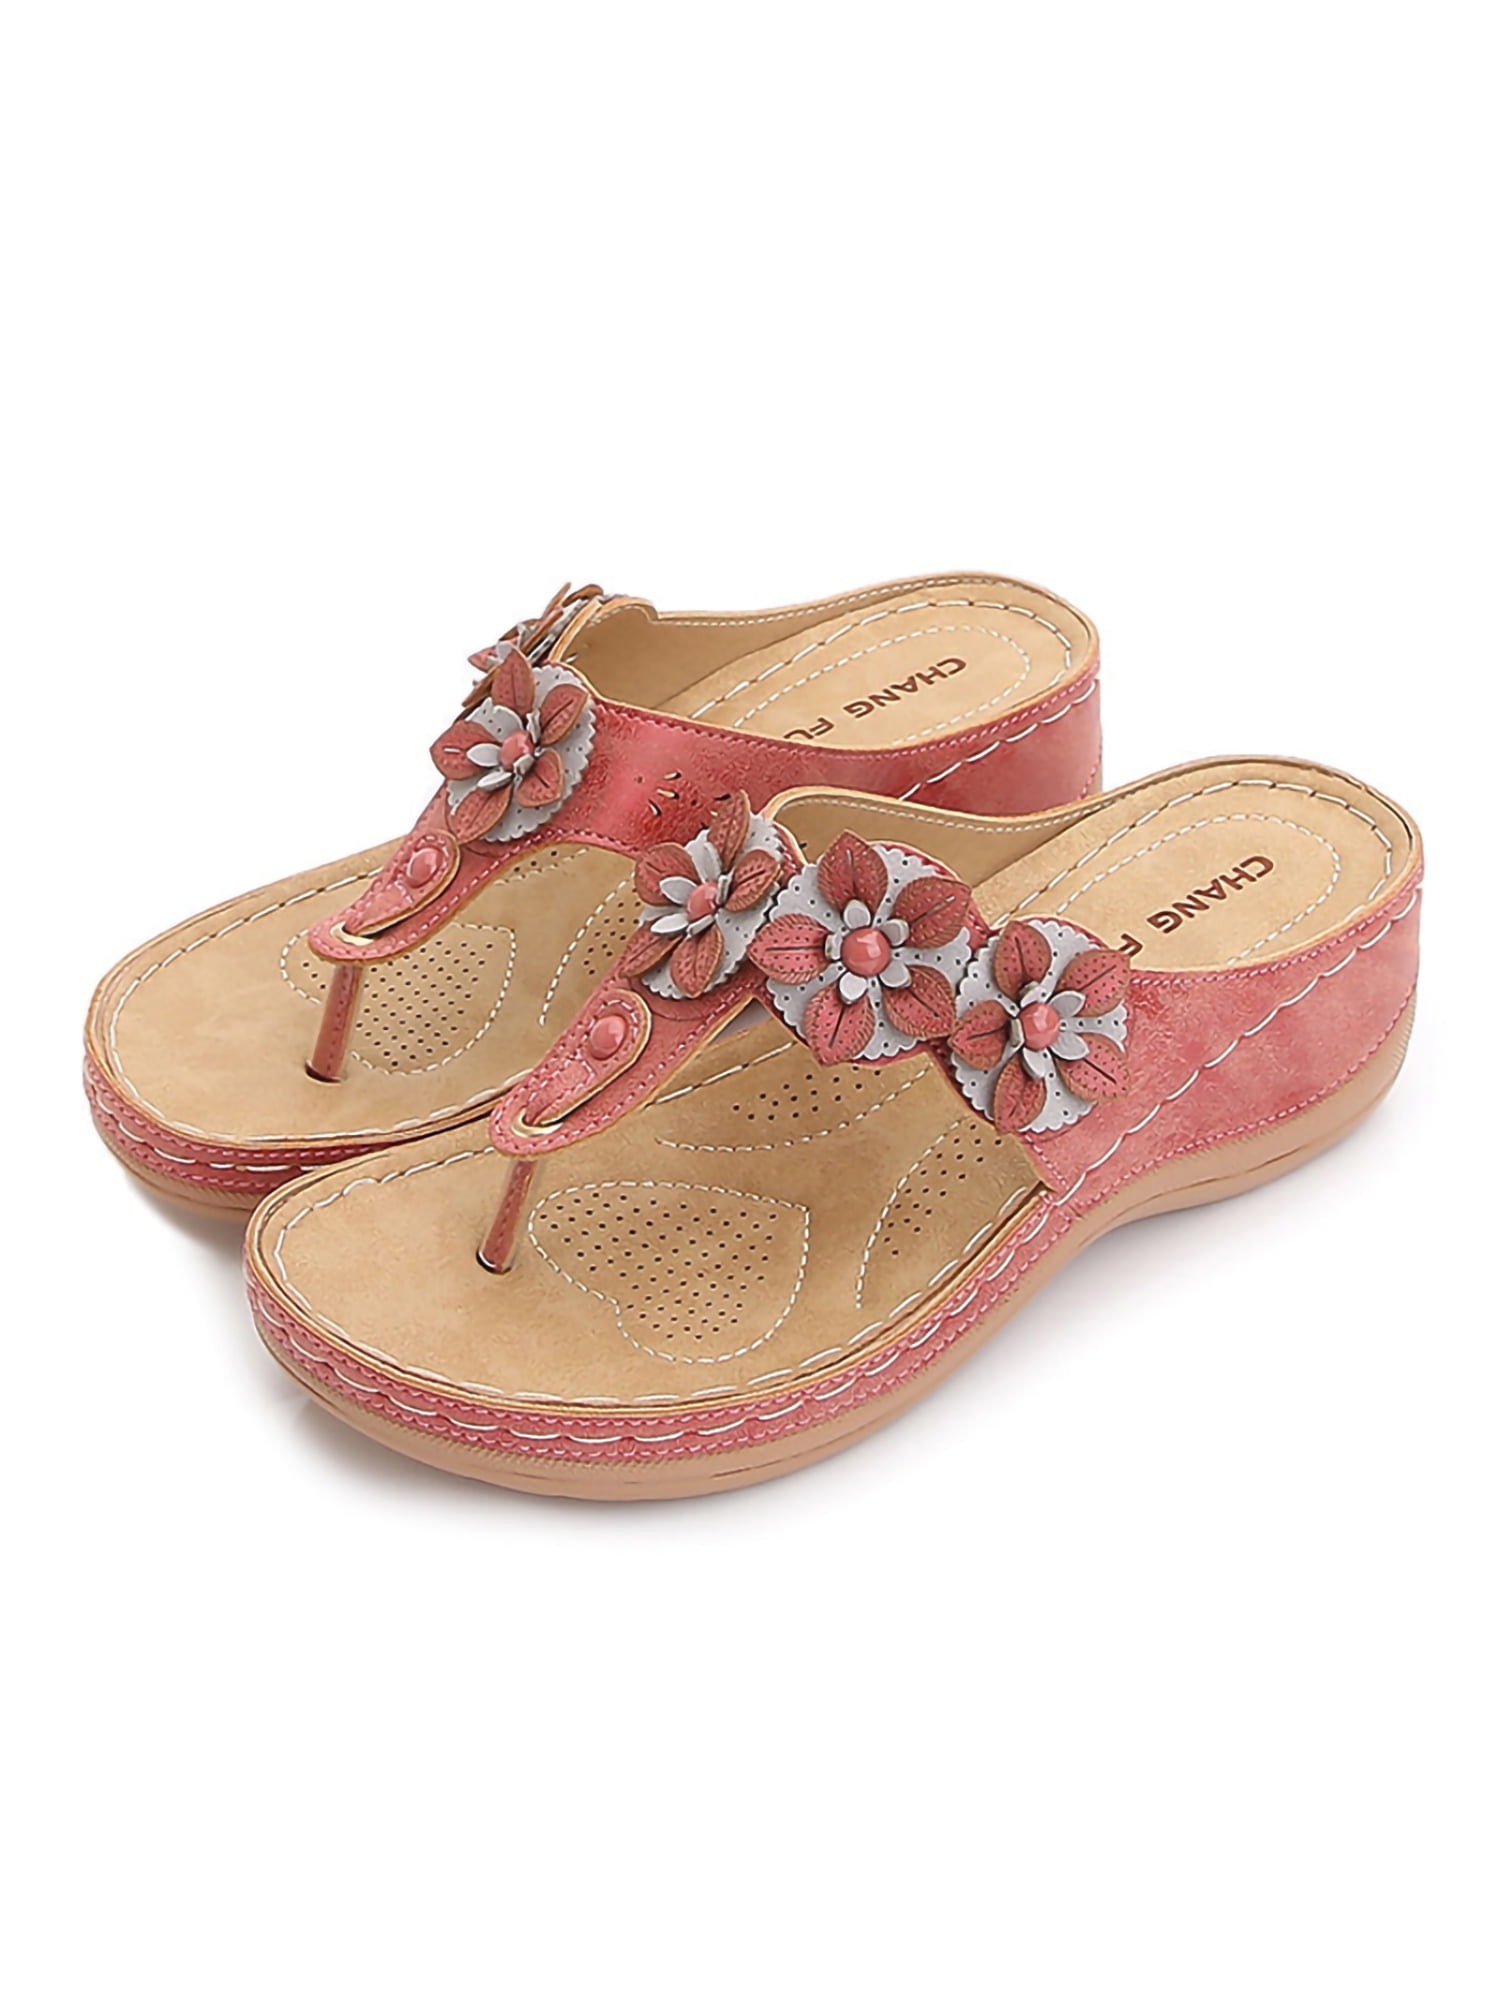 Women's Flip Flops Thong Slip On Casual Flower Decoration Sandals Shoes